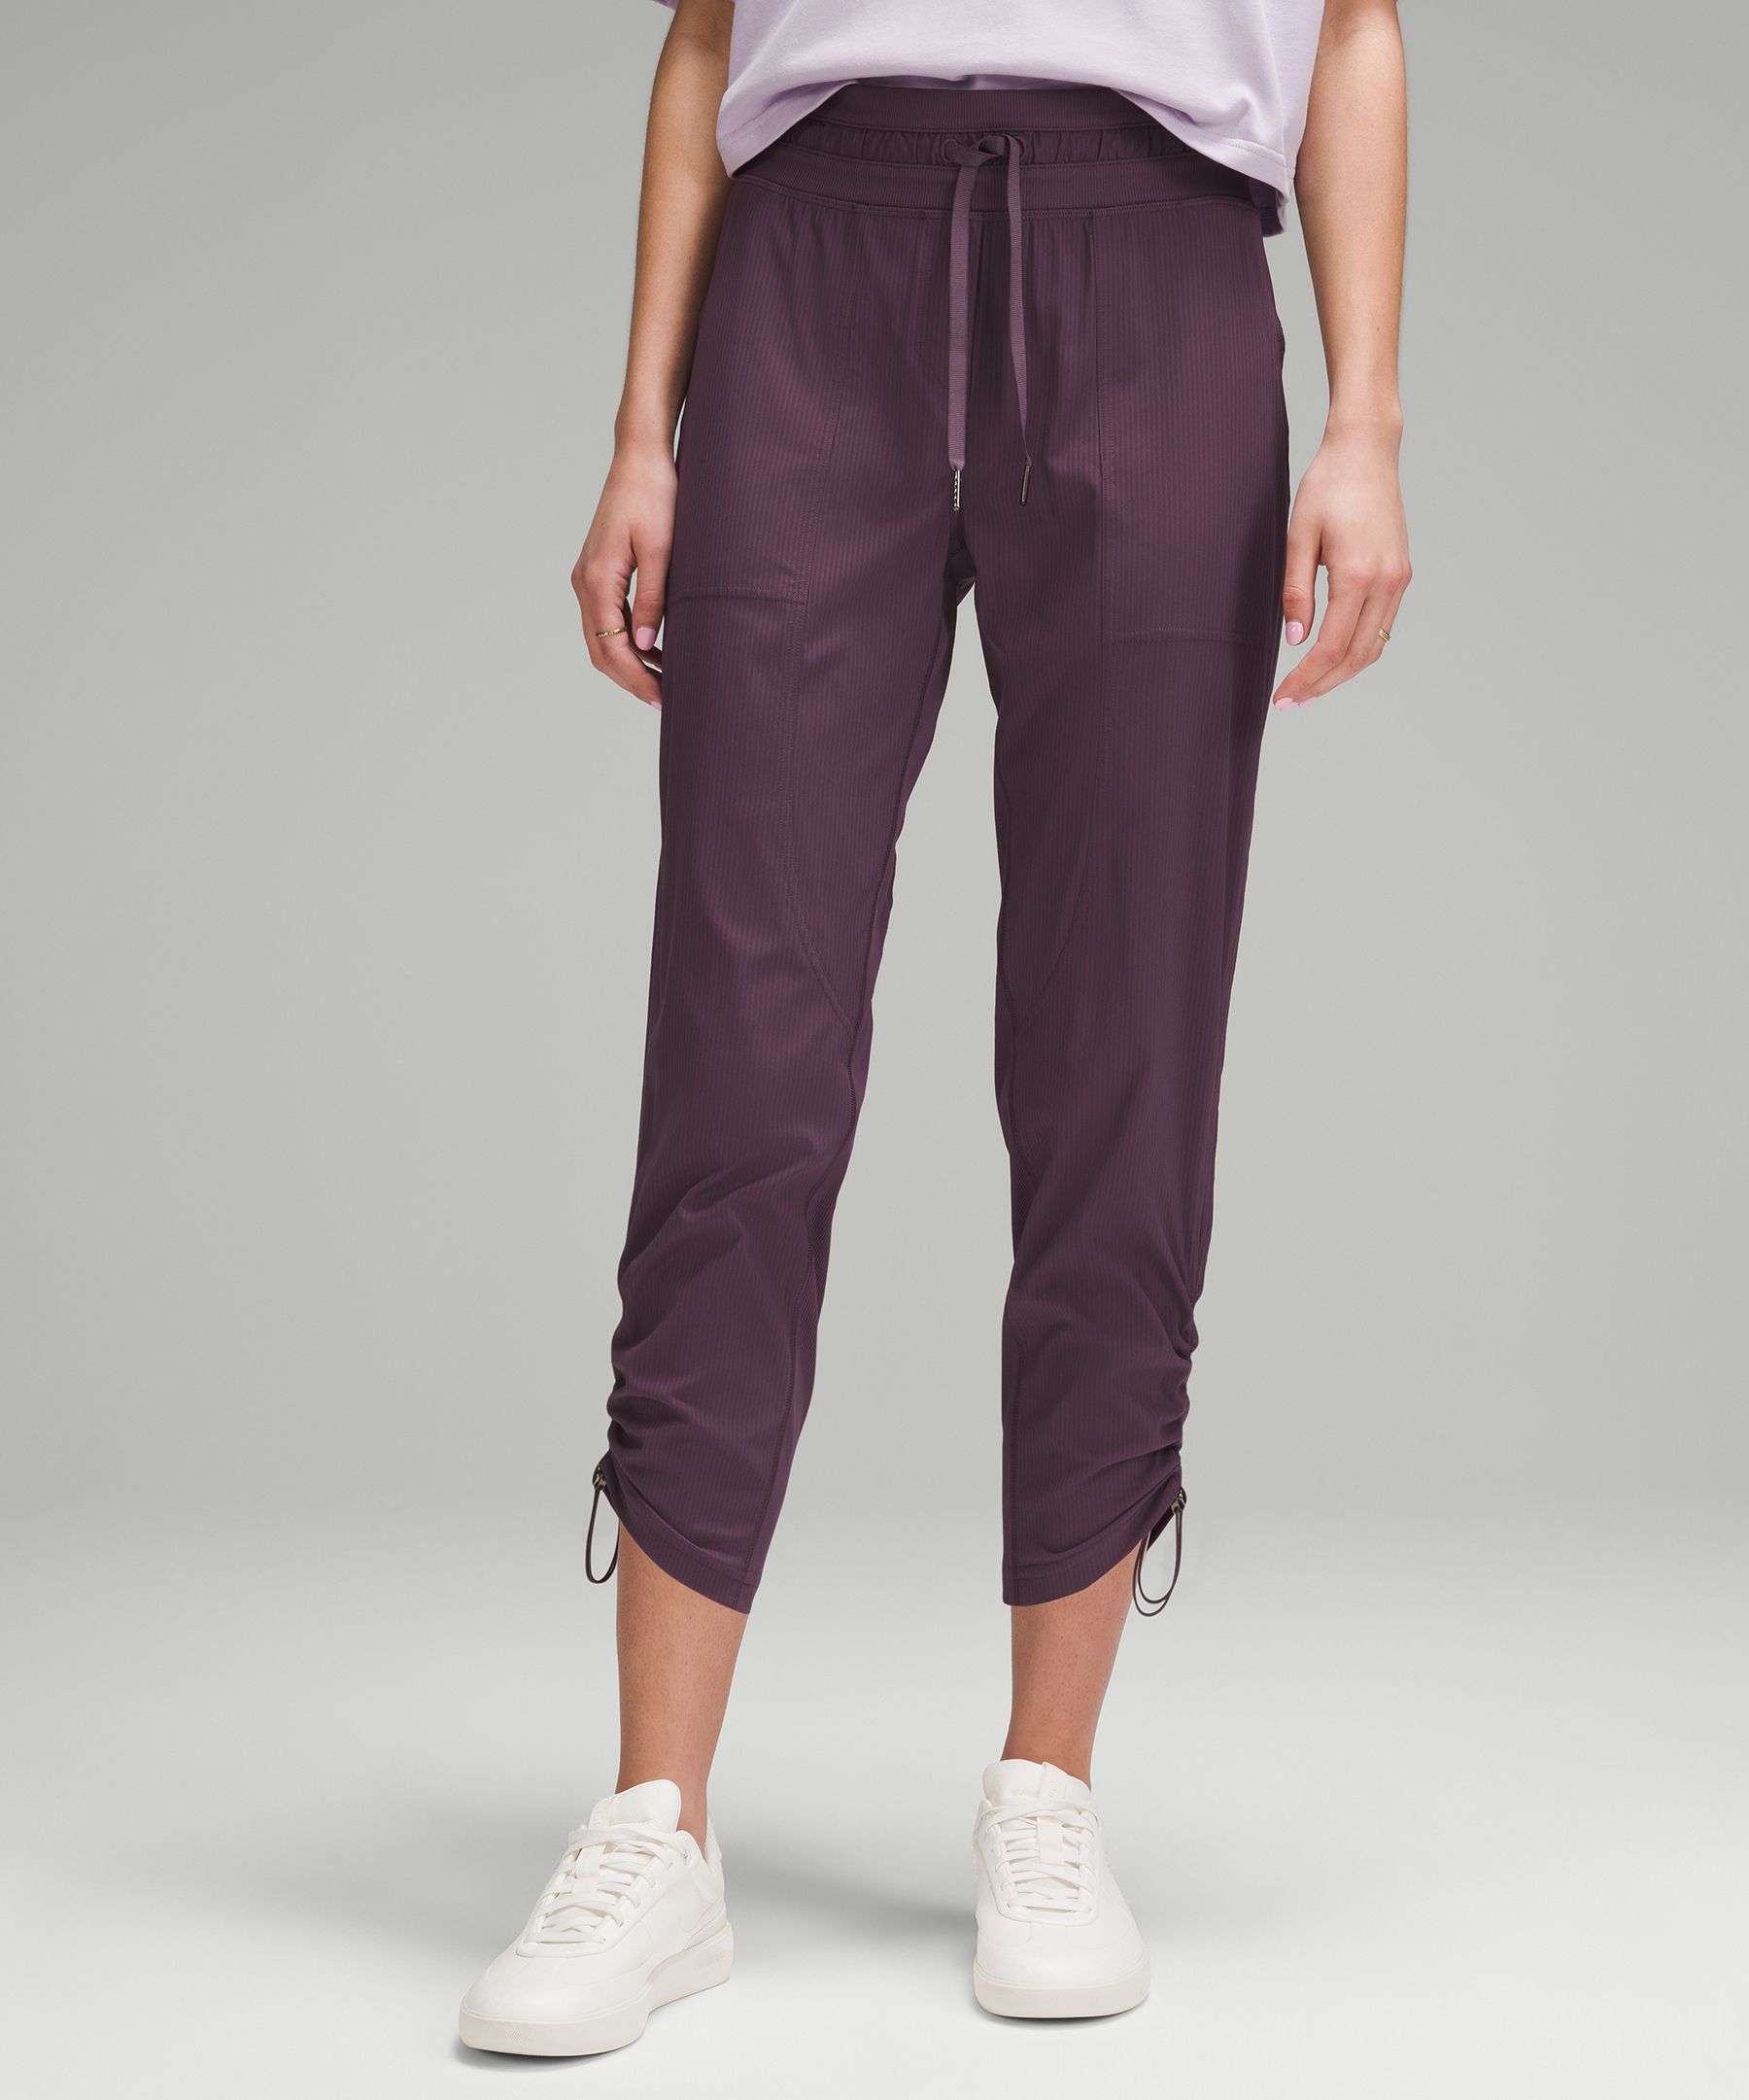 Lululemon Drawstring Purple & Green Dance Studio Pants Size 6 - $45 - From  Katie